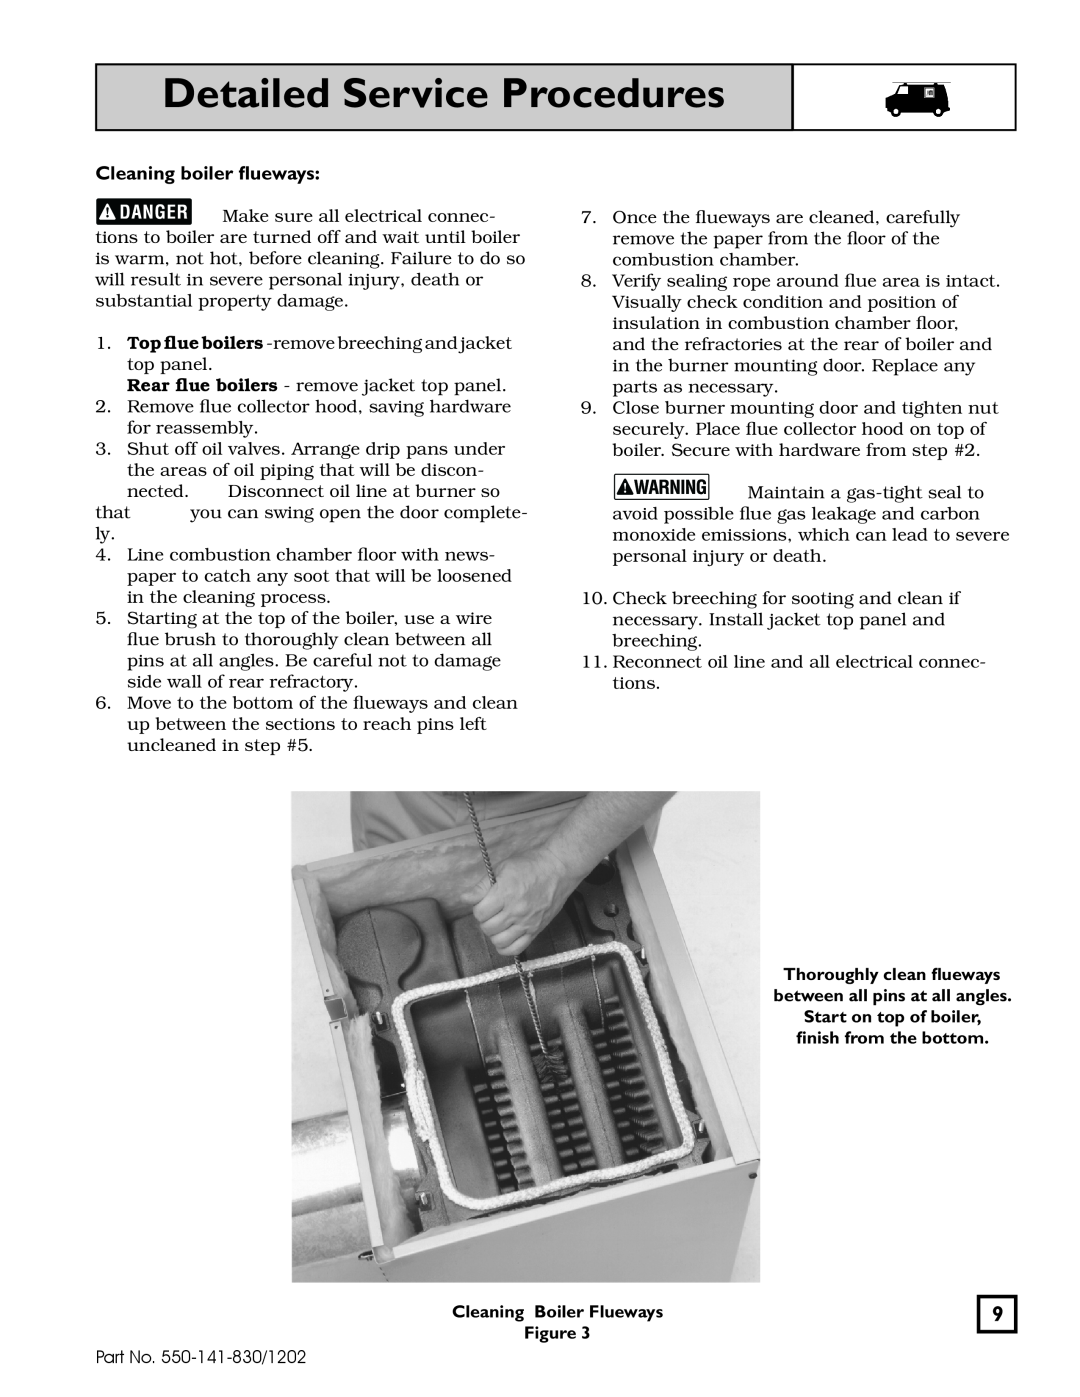 Weil-McLain 550-141-830/1202 manual Detailed Service Procedures, Cleaning boiler flueways, Cleaning Boiler Flueways Figure 